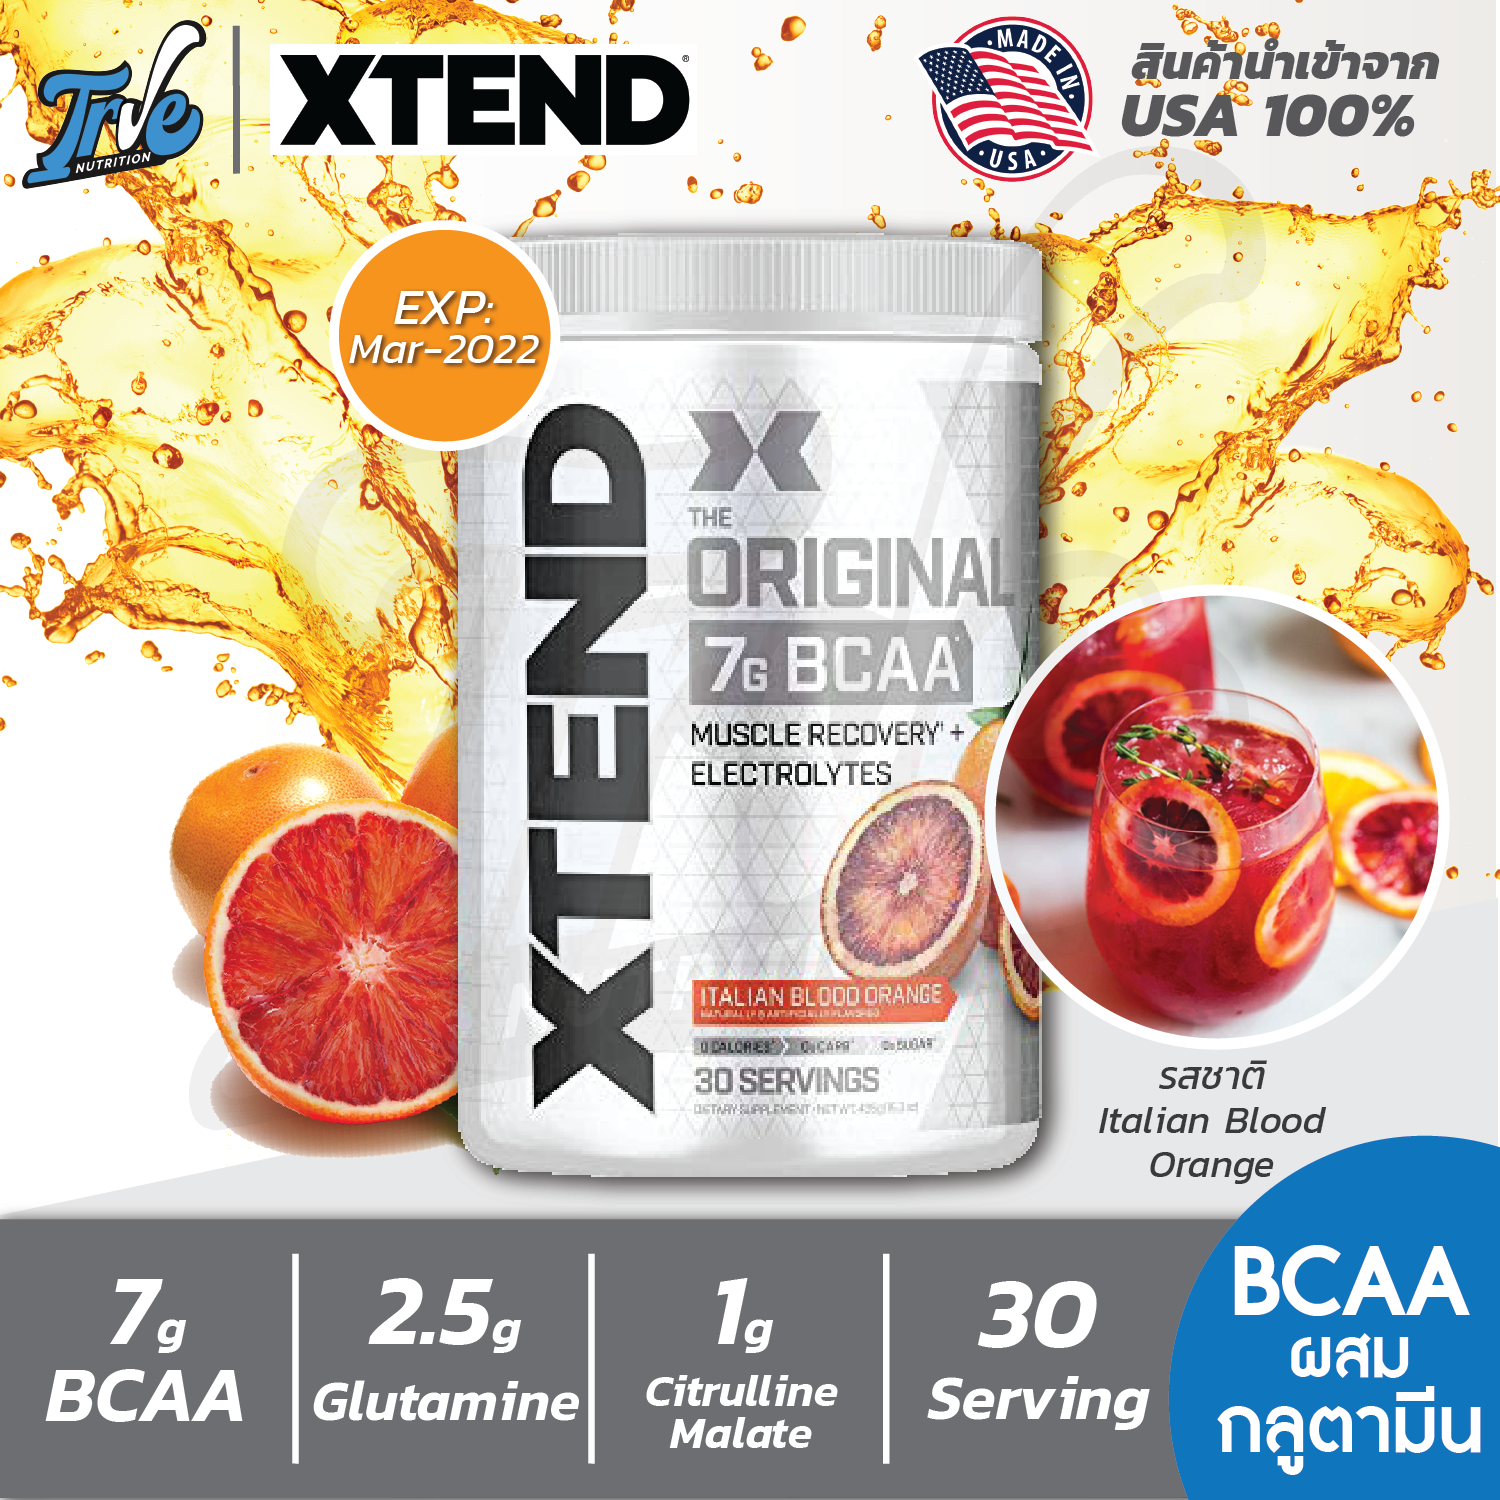 Xtend BCAA 30servings - Italian Blood Orange อะมิโน BCAA สร้างกล้ามเนื้อ ป้องกันกล้ามเนื้อสลายตัว